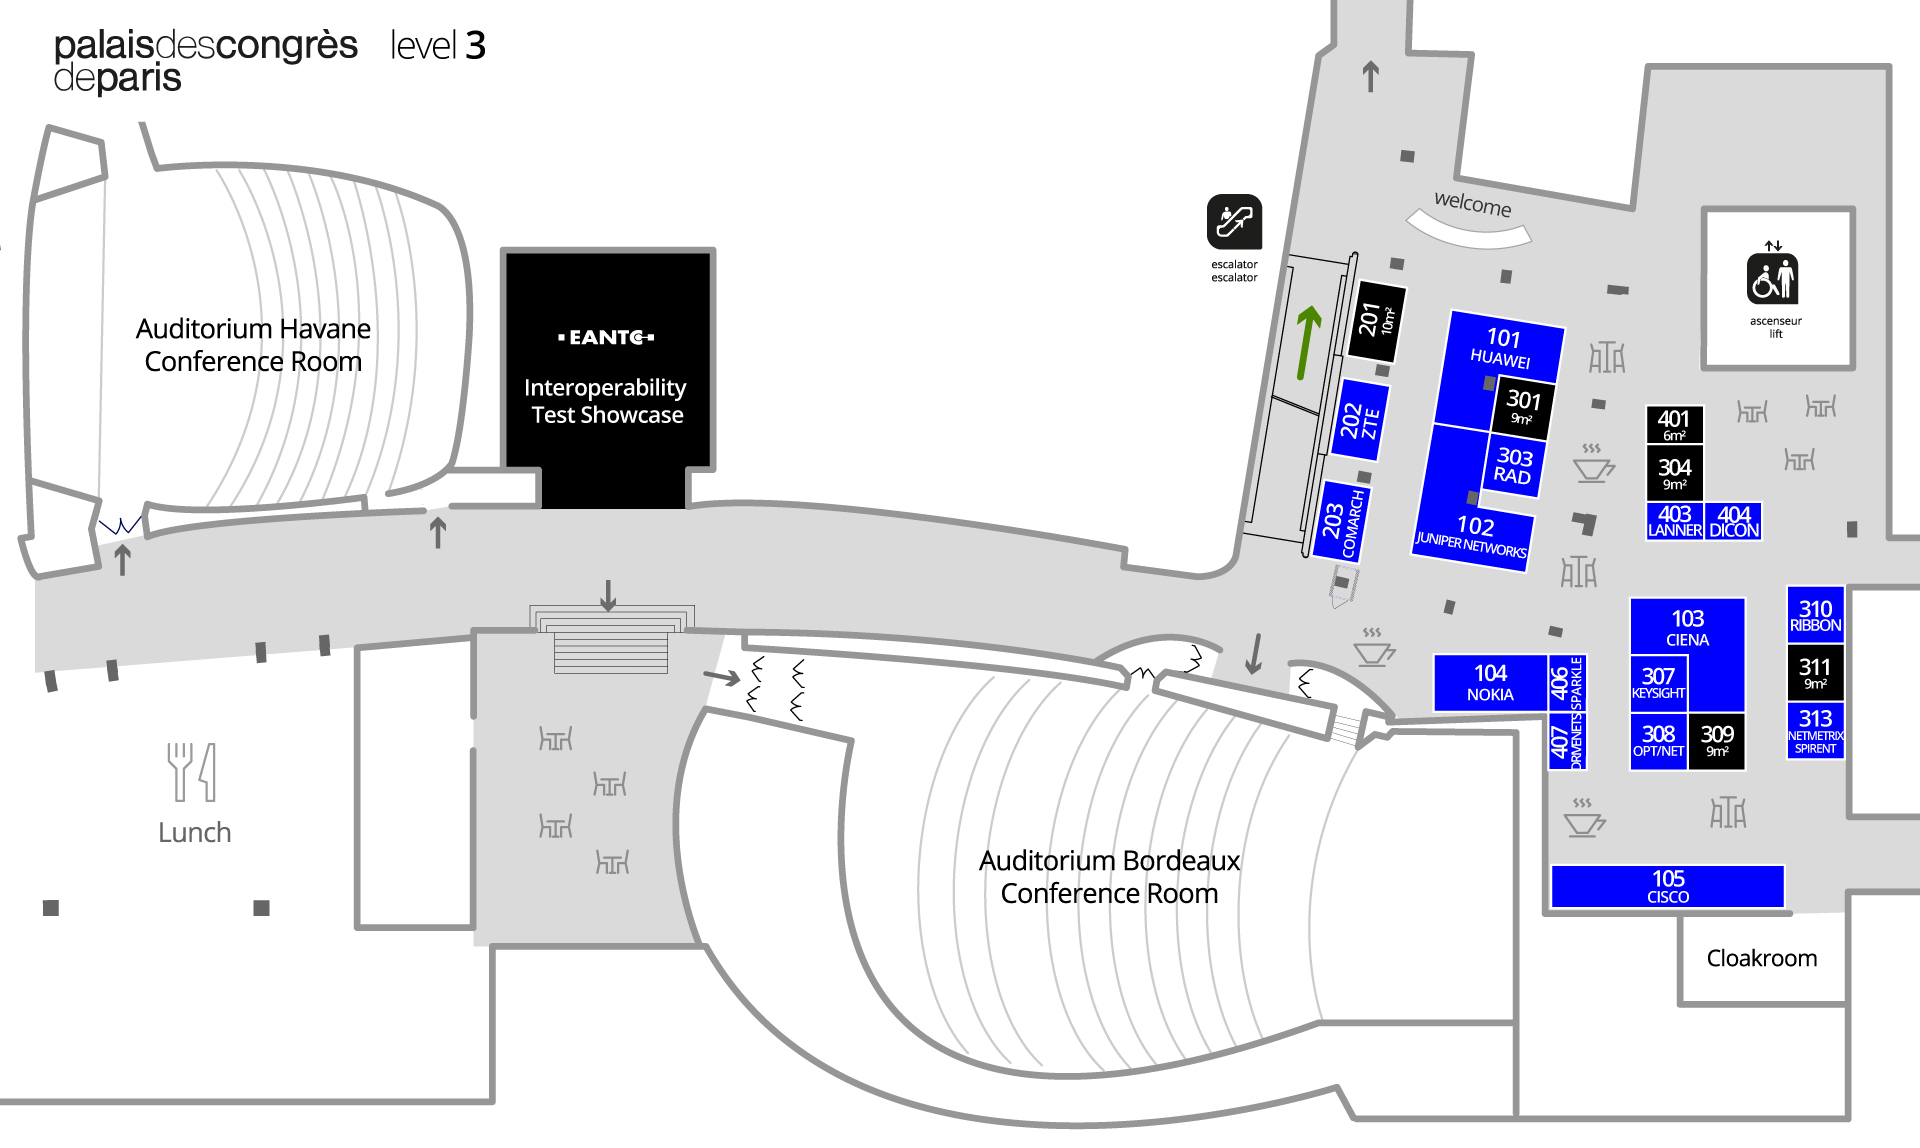 Exhibition Floor Plan